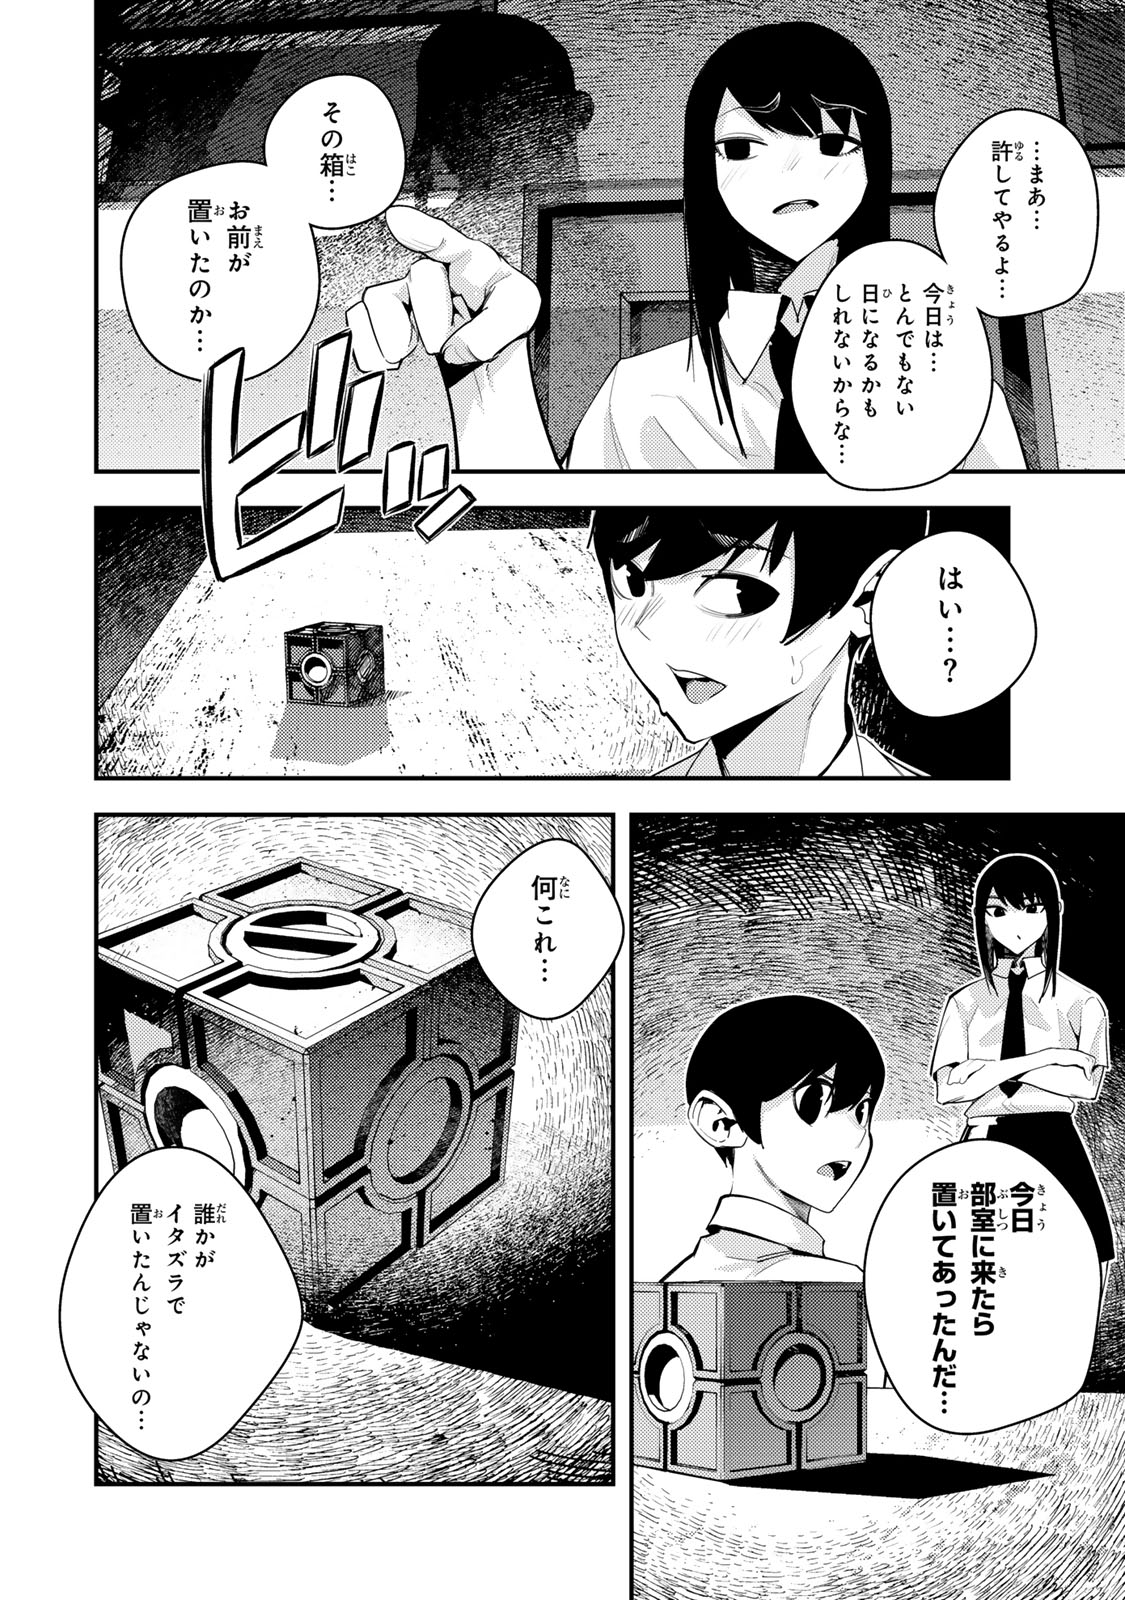 Seima Toubatsu Deneidan - Chapter 1 - Page 7